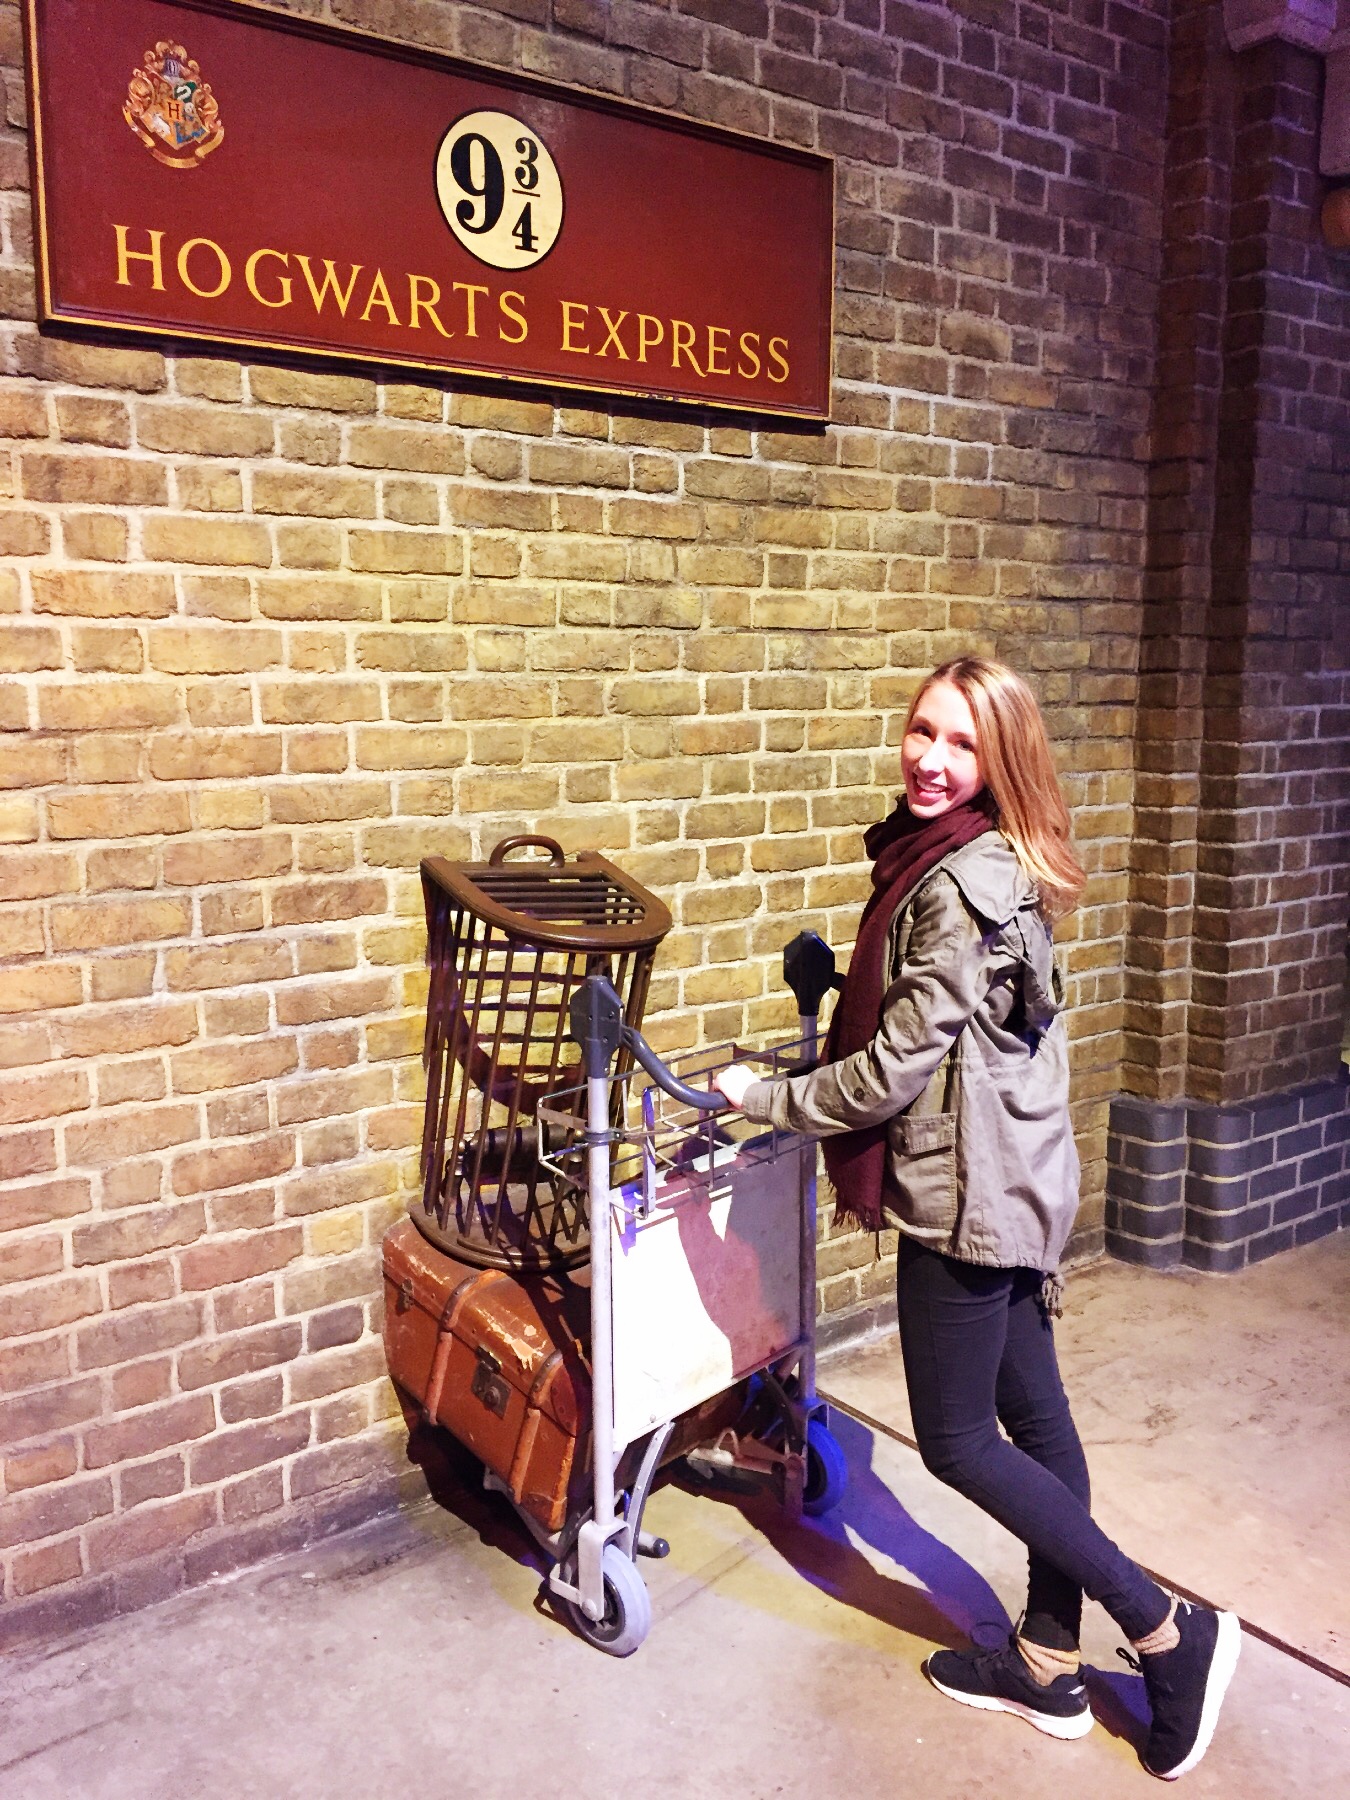 Amanda walking through the wall of Platform 9 3/4 to get to the Hogwarts Express